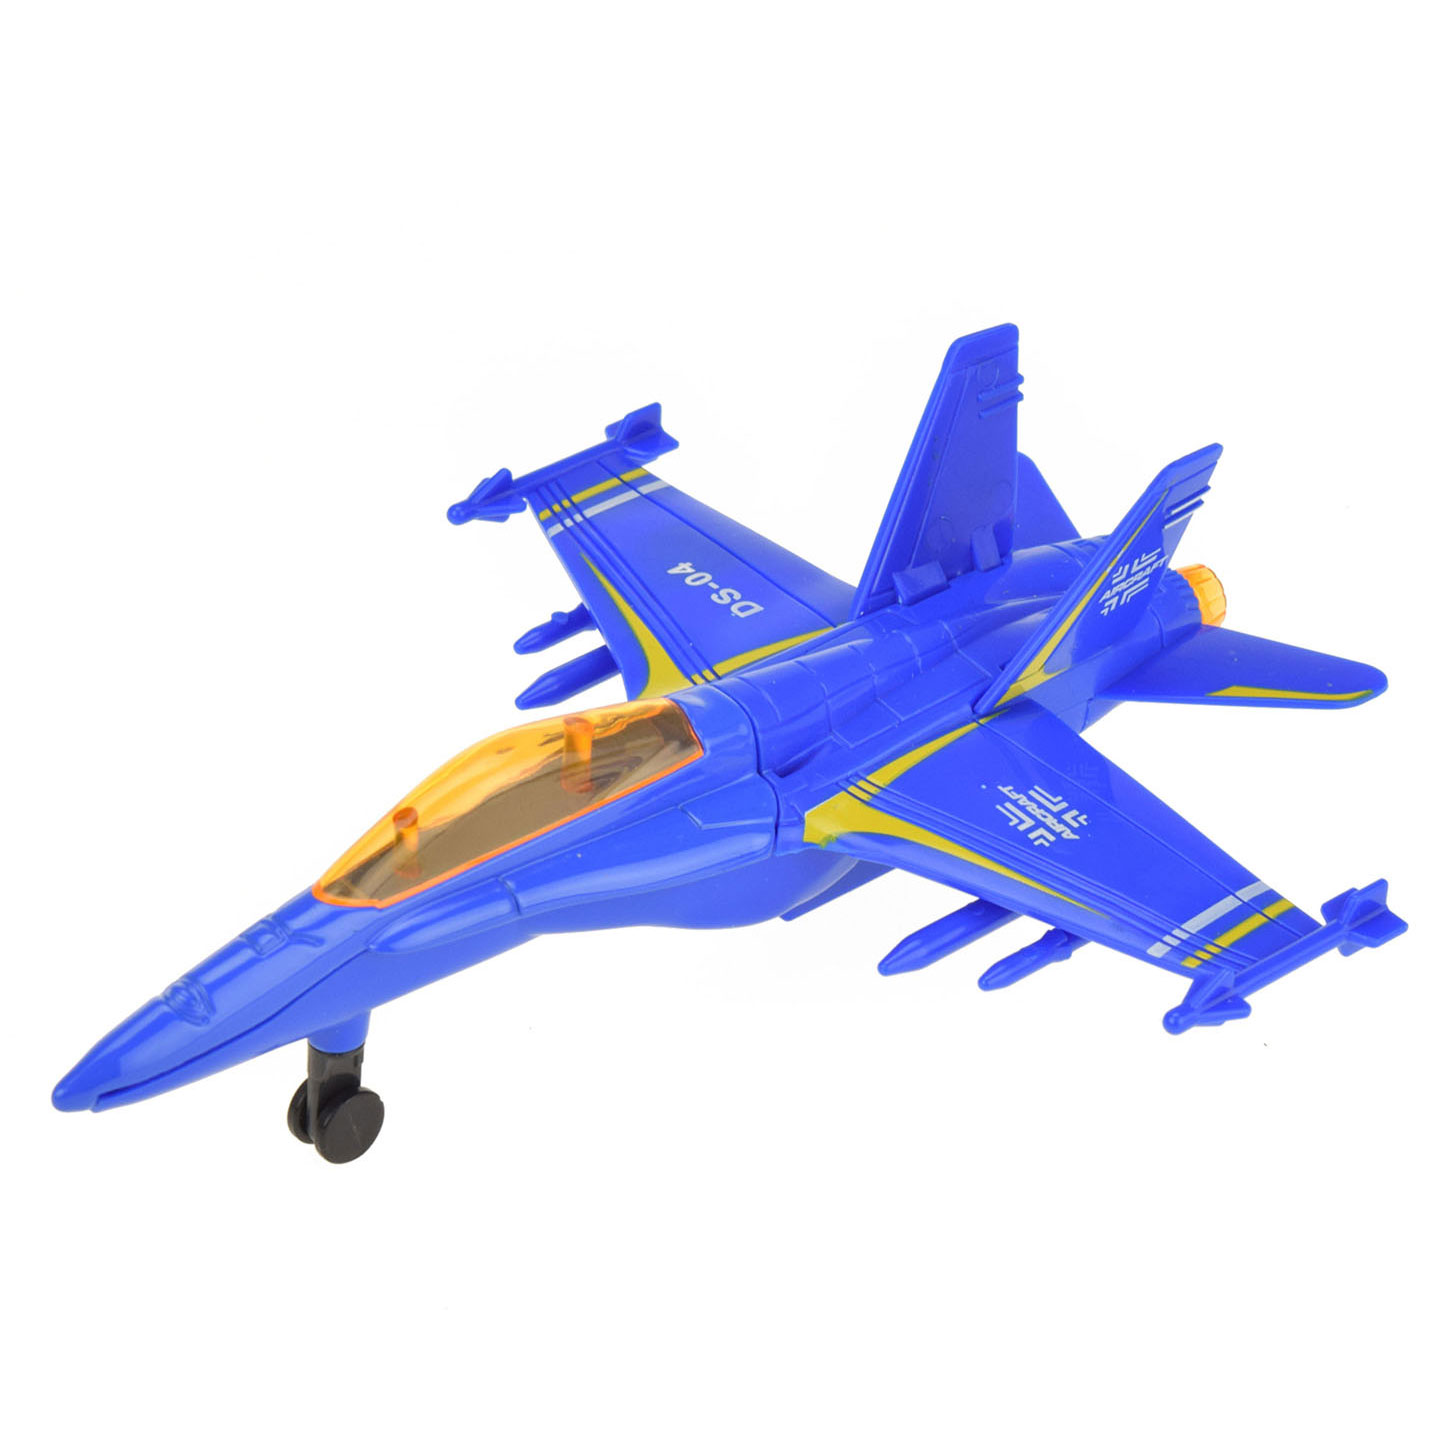 Zurückziehbares Kampfflugzeug aus Metall